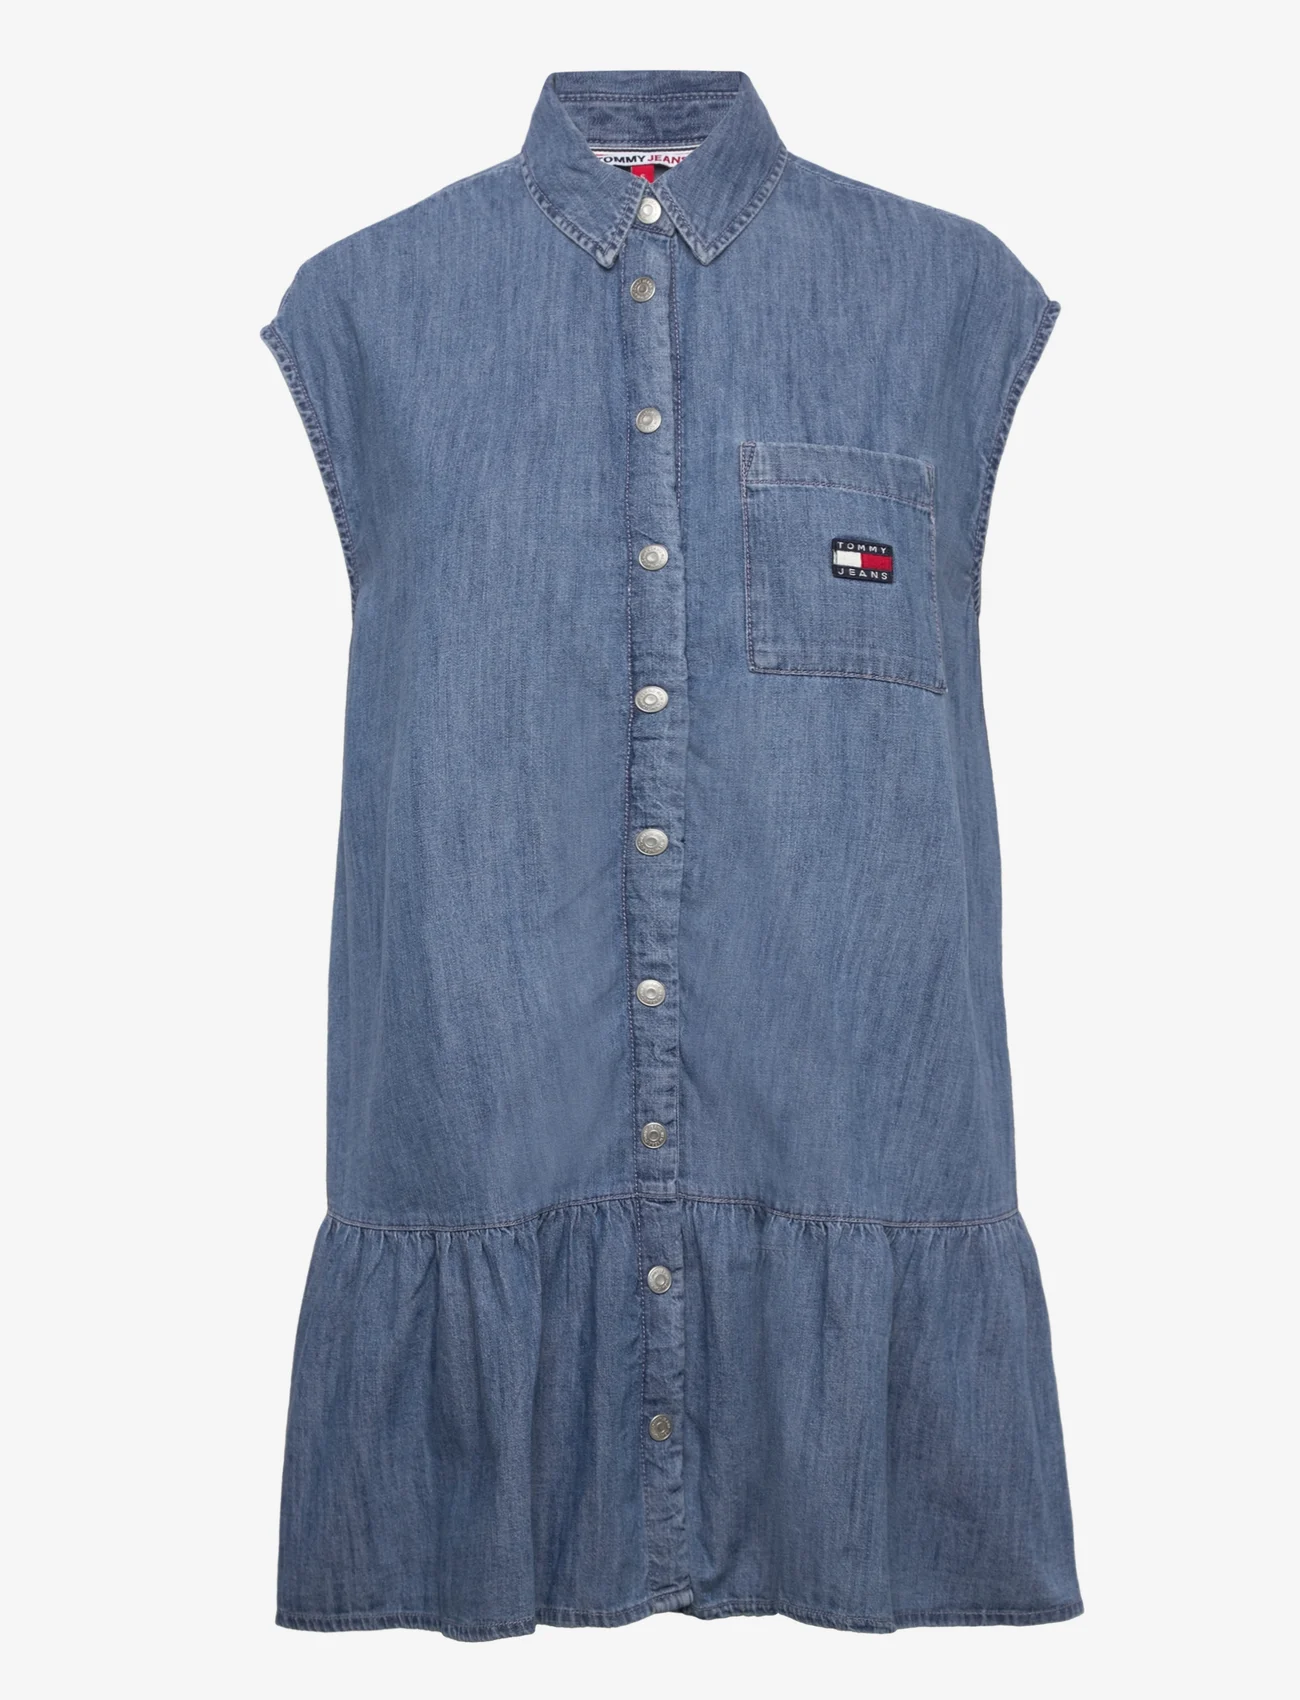 Tommy Jeans - TJW SS BADGE CHAMBRAY DRESS - denim dresses - denim medium - 0